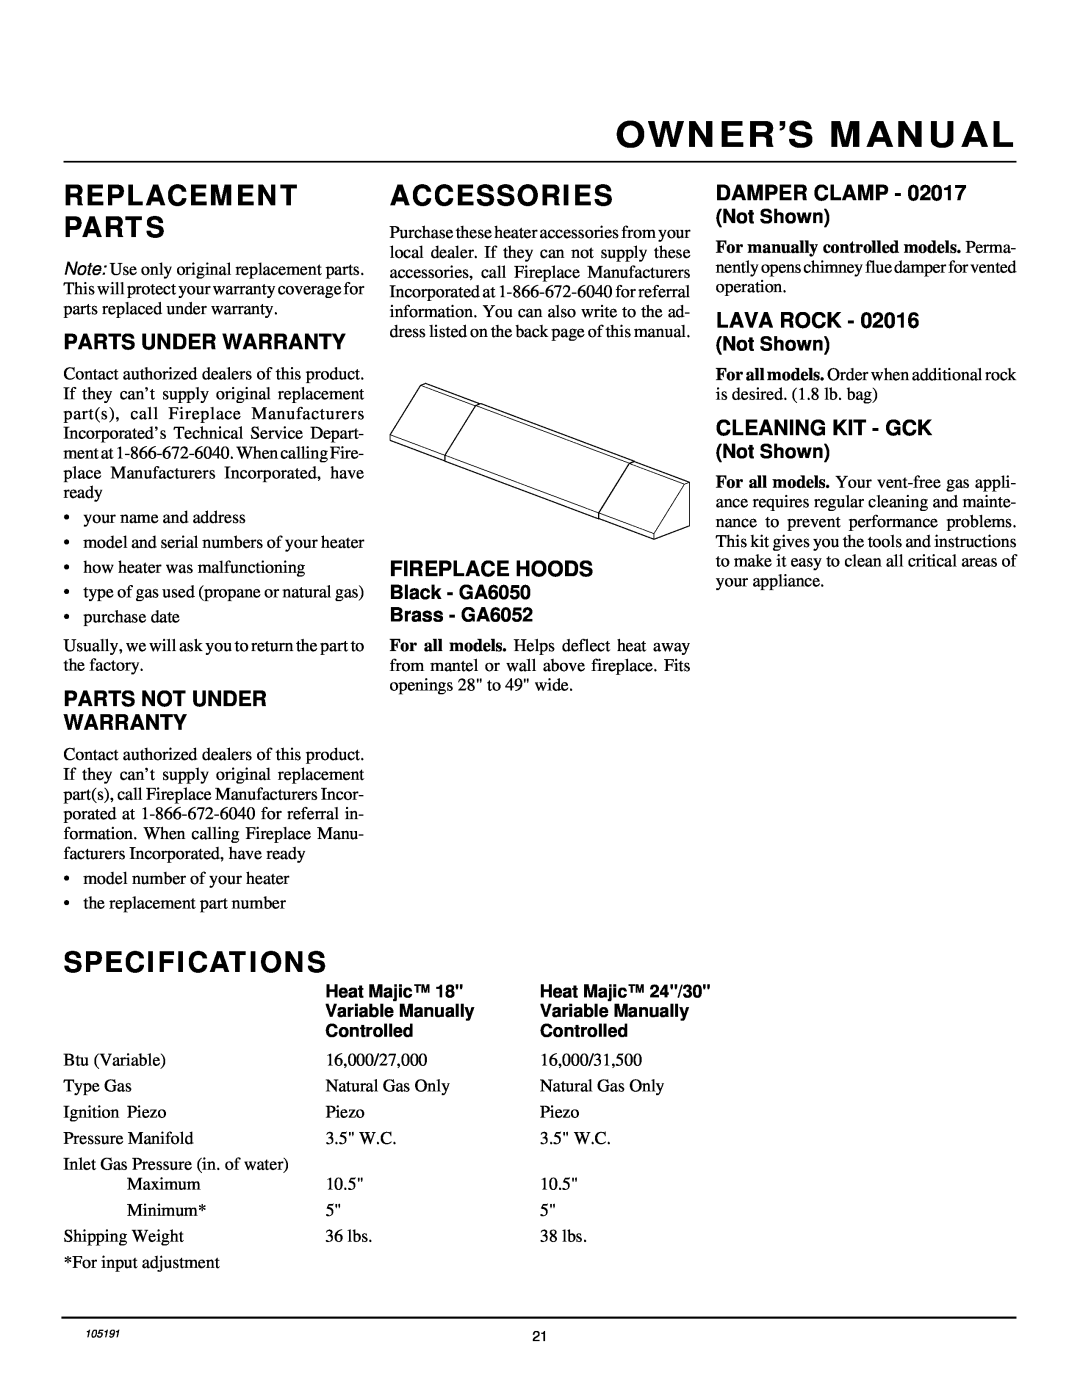 Desa FVF30N Replacement Parts, Accessories, Specifications, Parts Under Warranty, Parts Not Under Warranty, Damper Clamp 